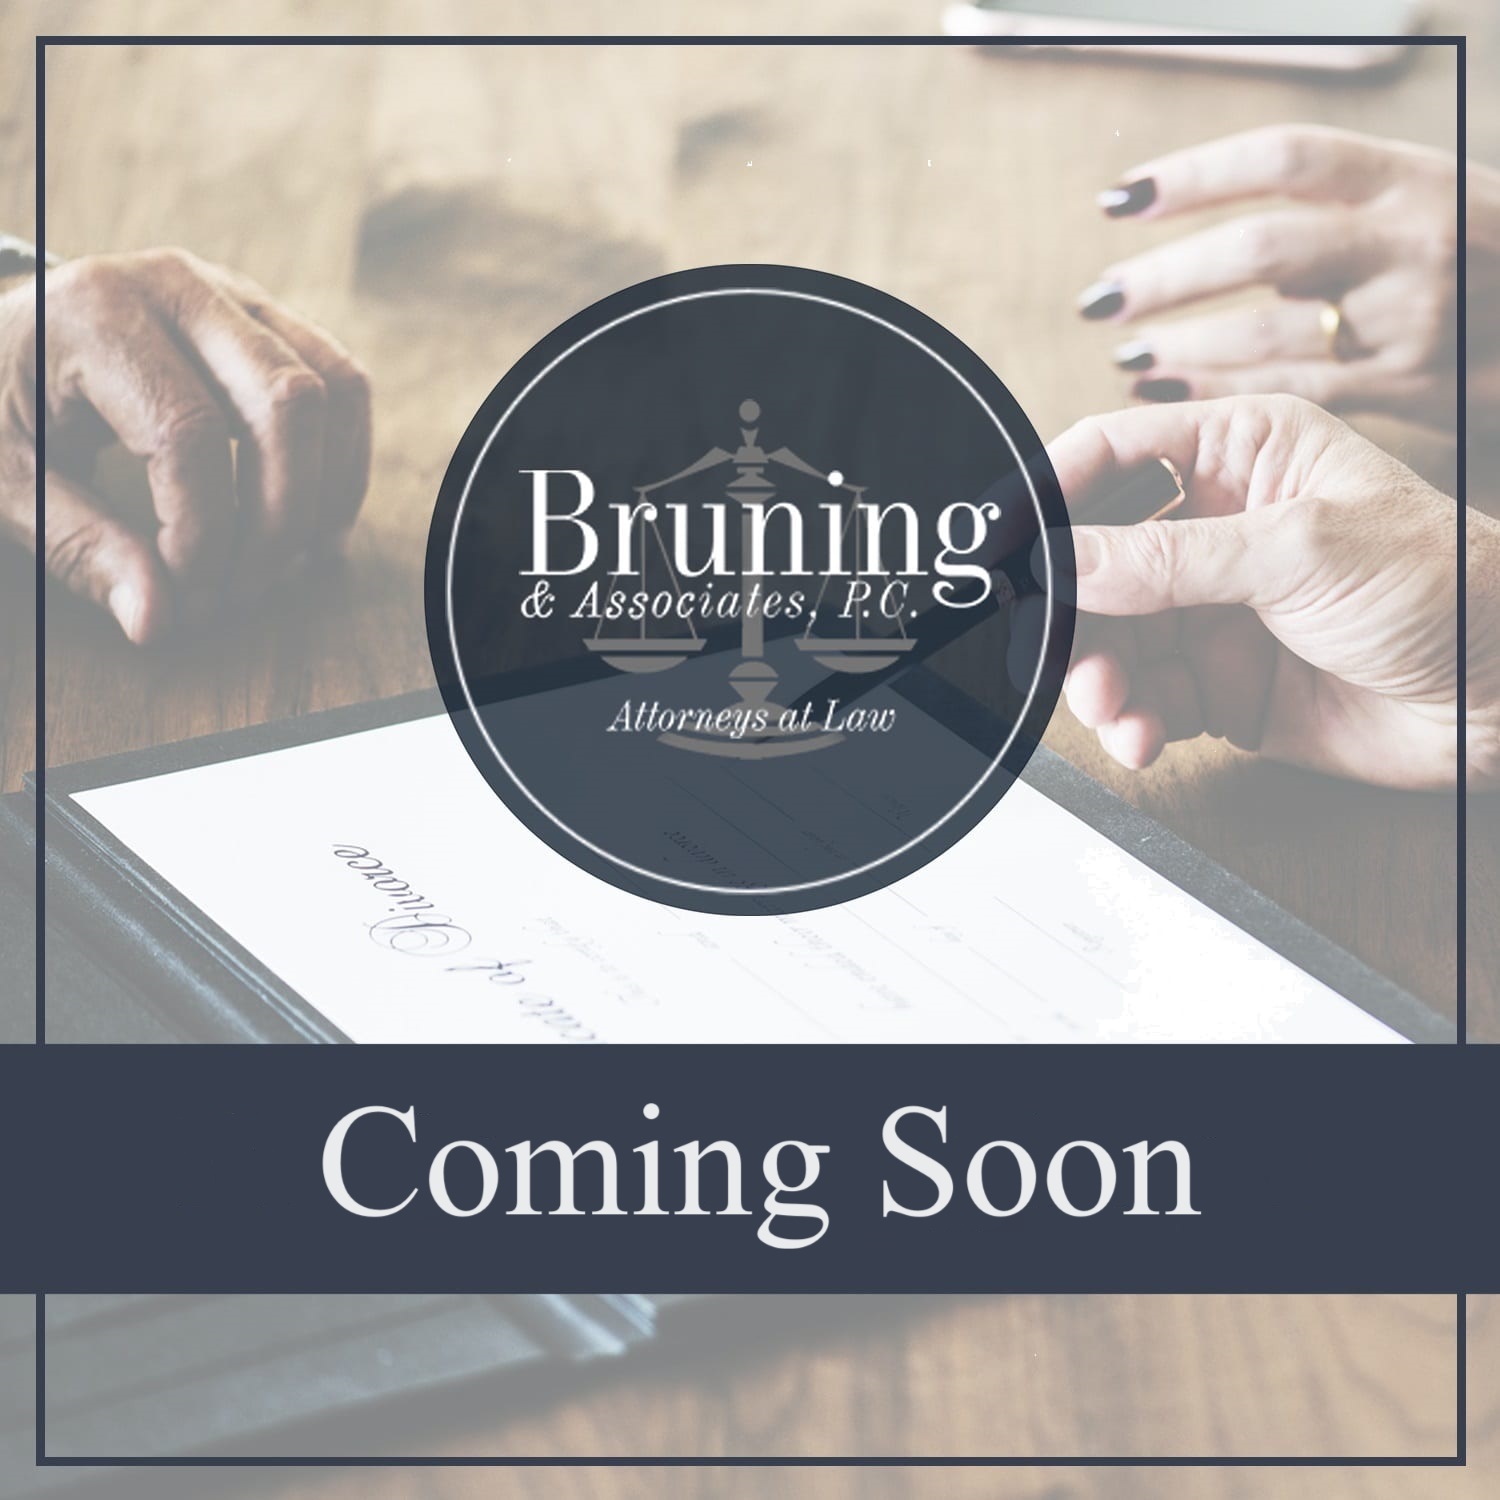 Bruning & Associates, P.C – Coming Soon